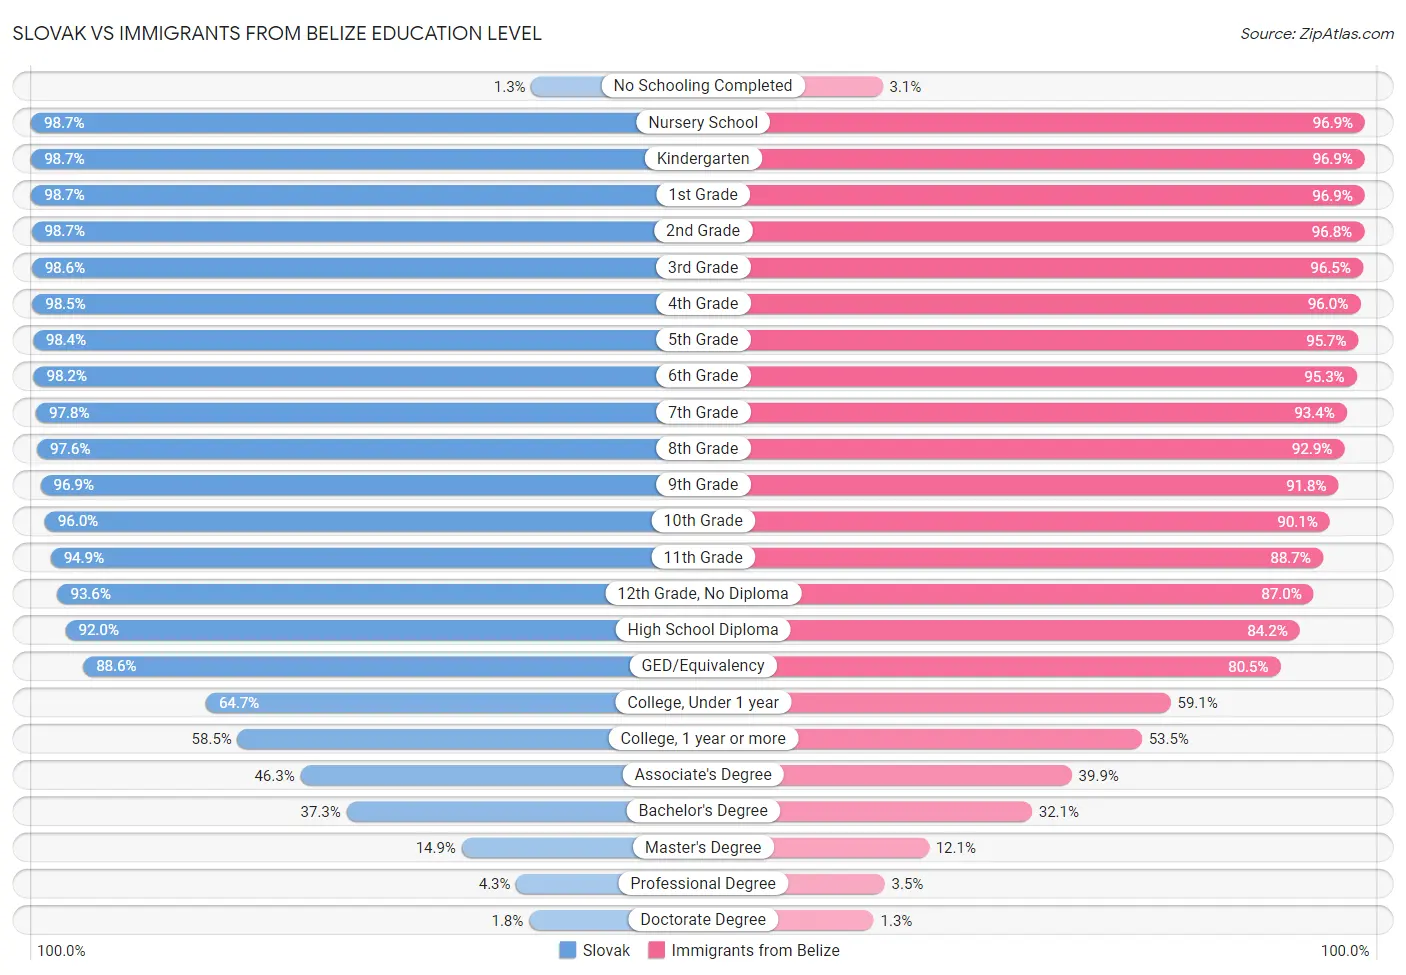 Slovak vs Immigrants from Belize Education Level